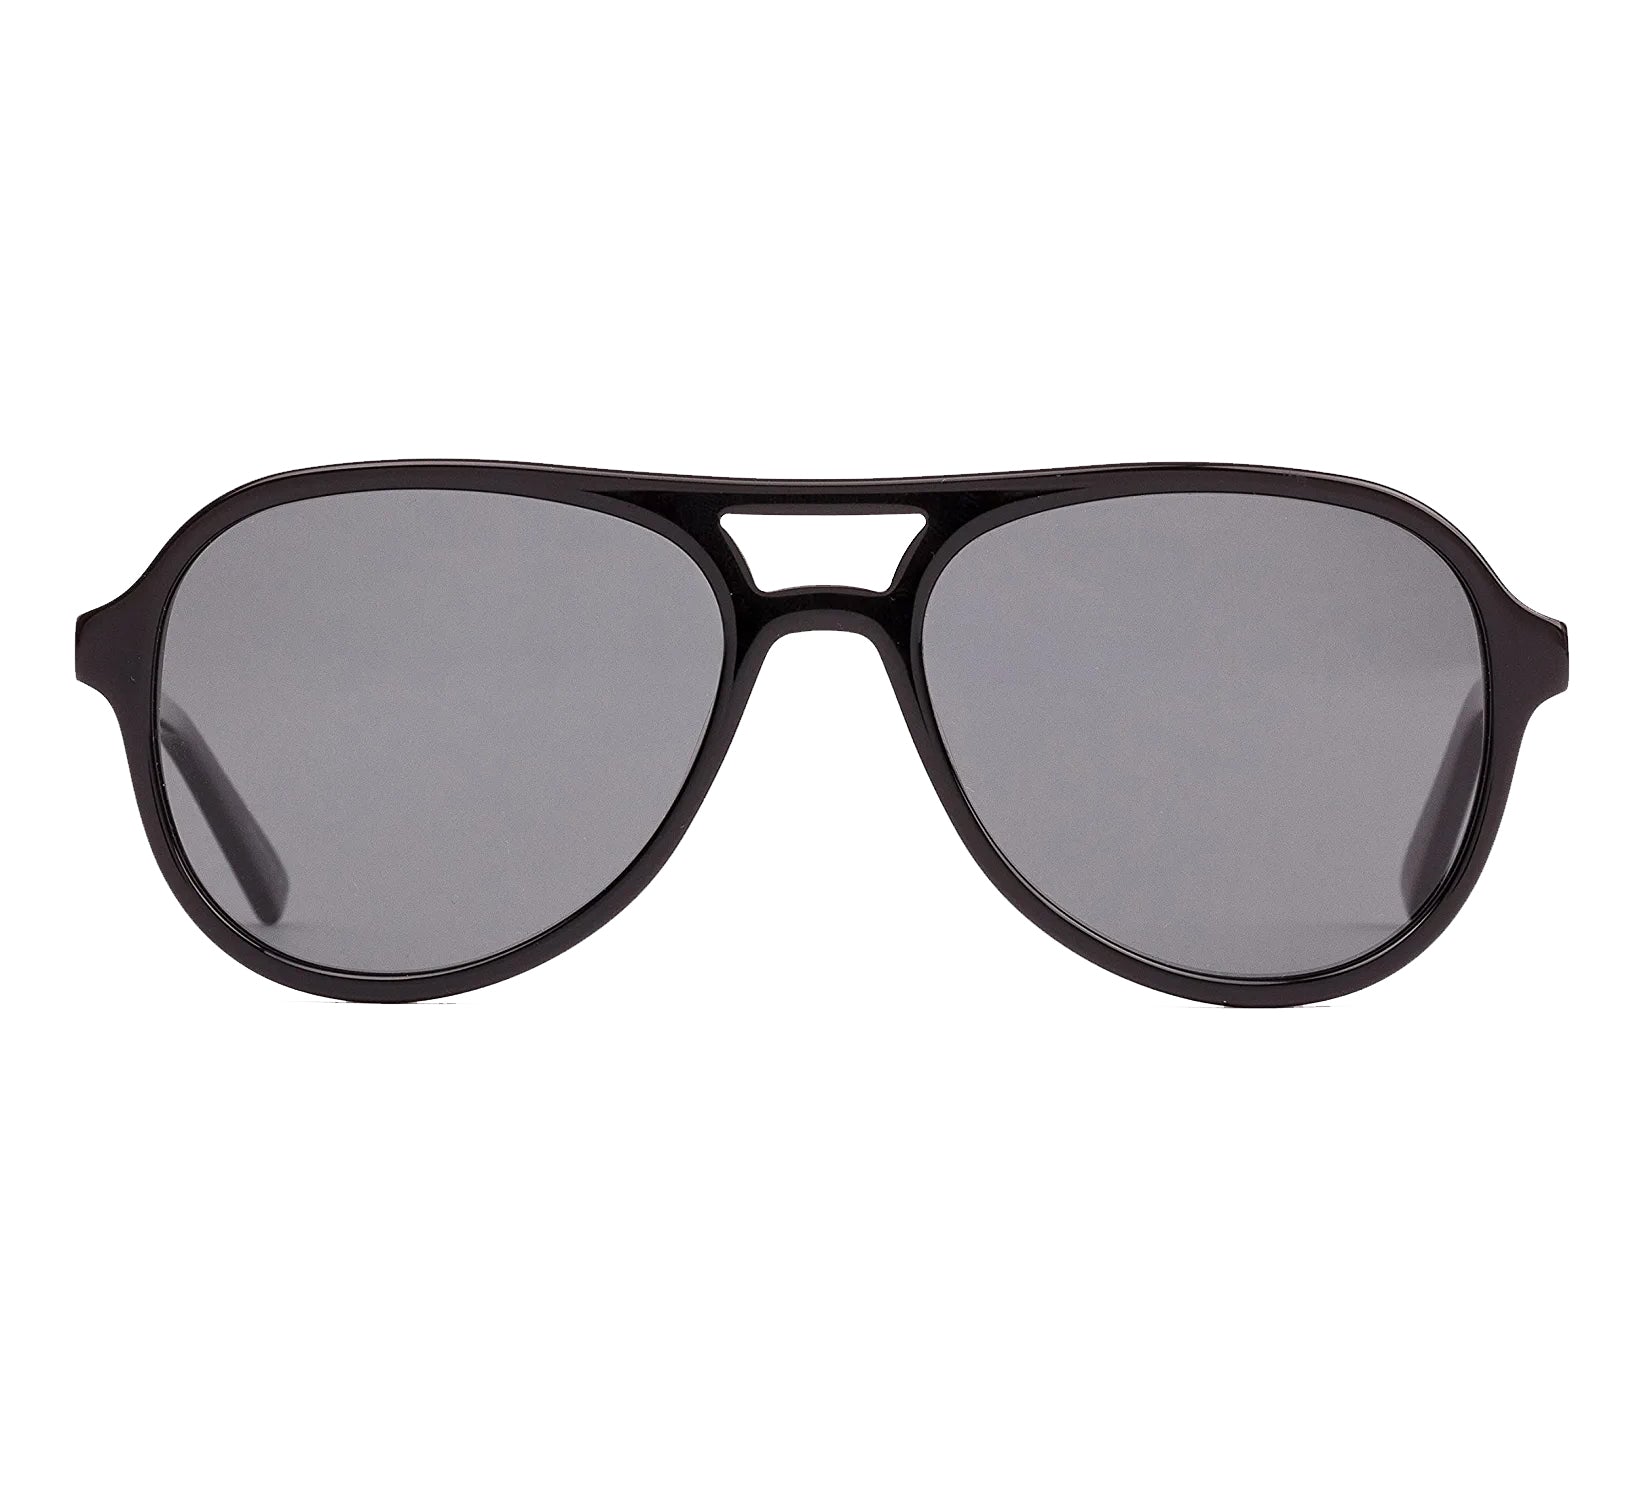 Sito Nightfever Polarized Sunglasses Black IronGrey